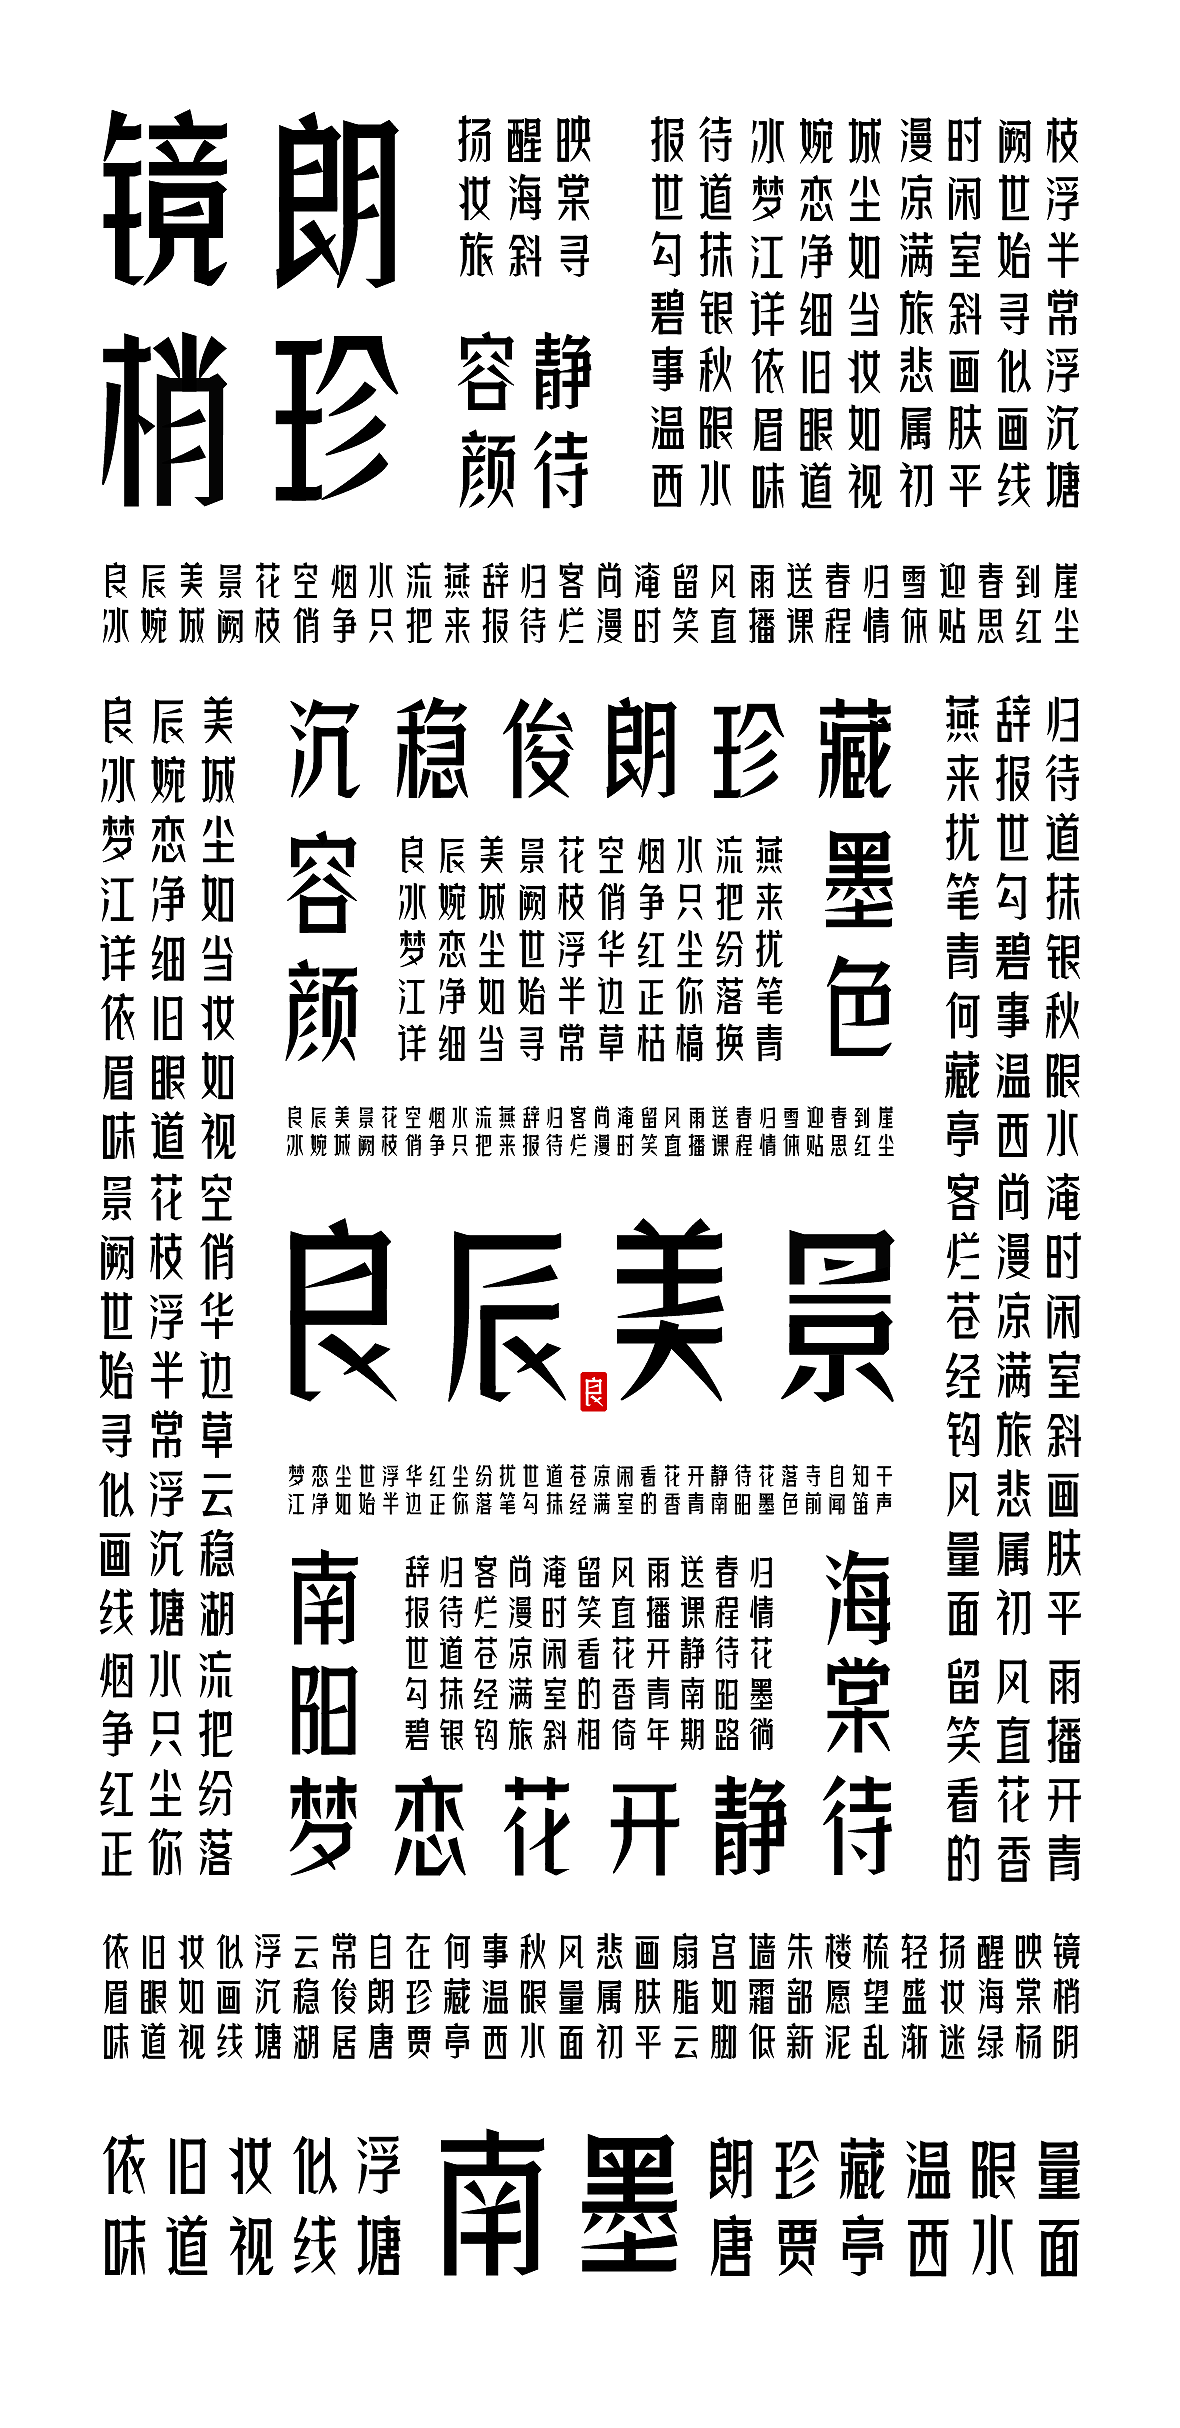 Design Scheme of 6 Art Title Fonts